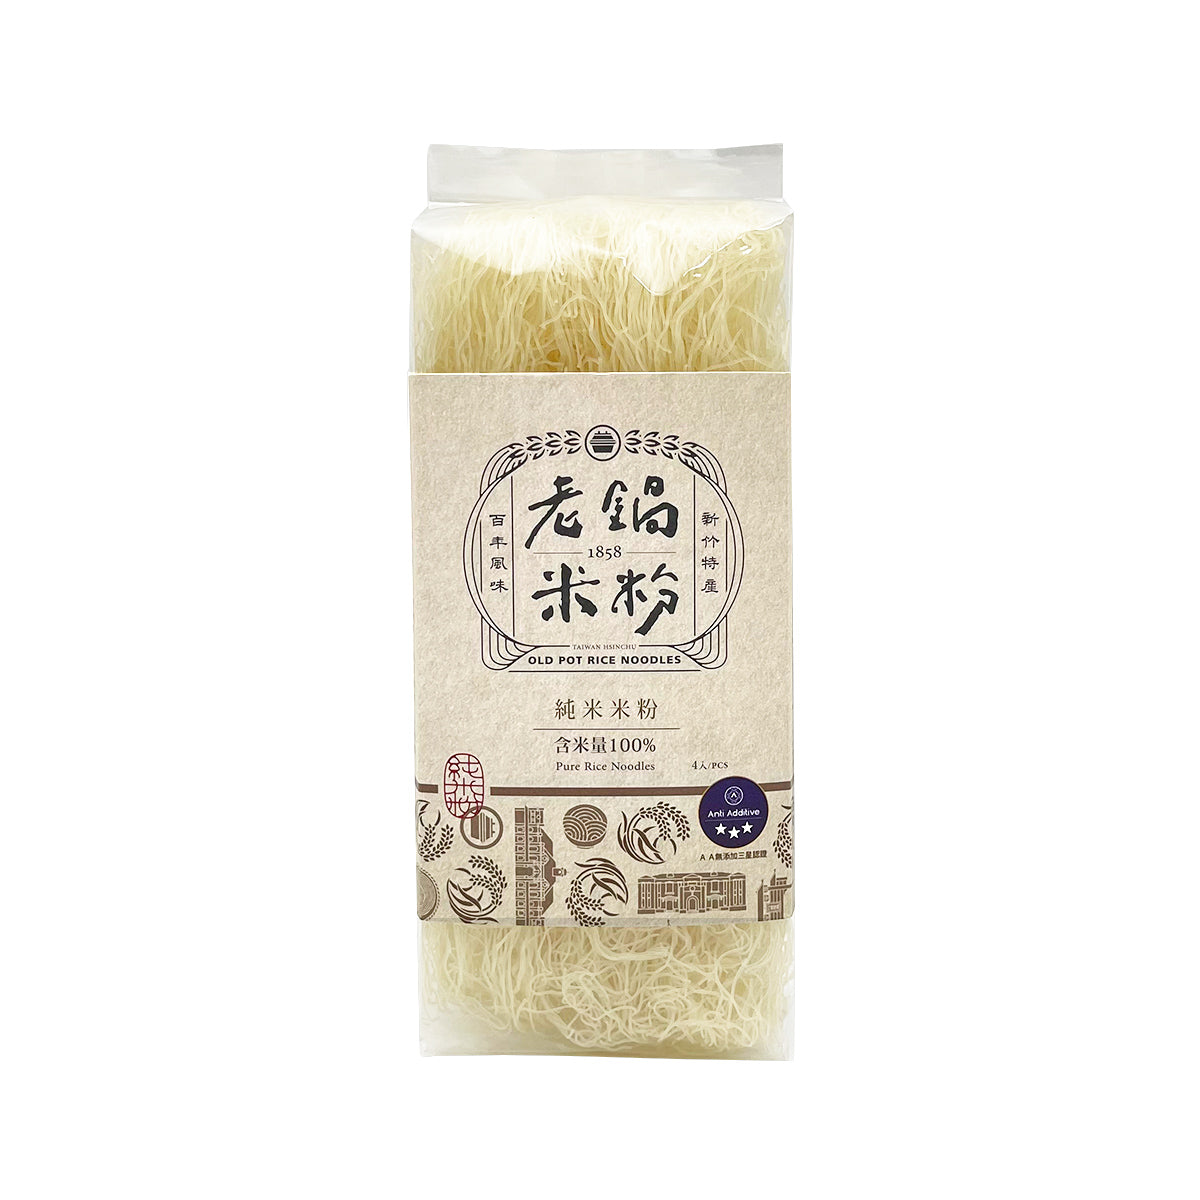 老鍋米粉 OLD POT RICE NOODLES 100%純米米粉 200g